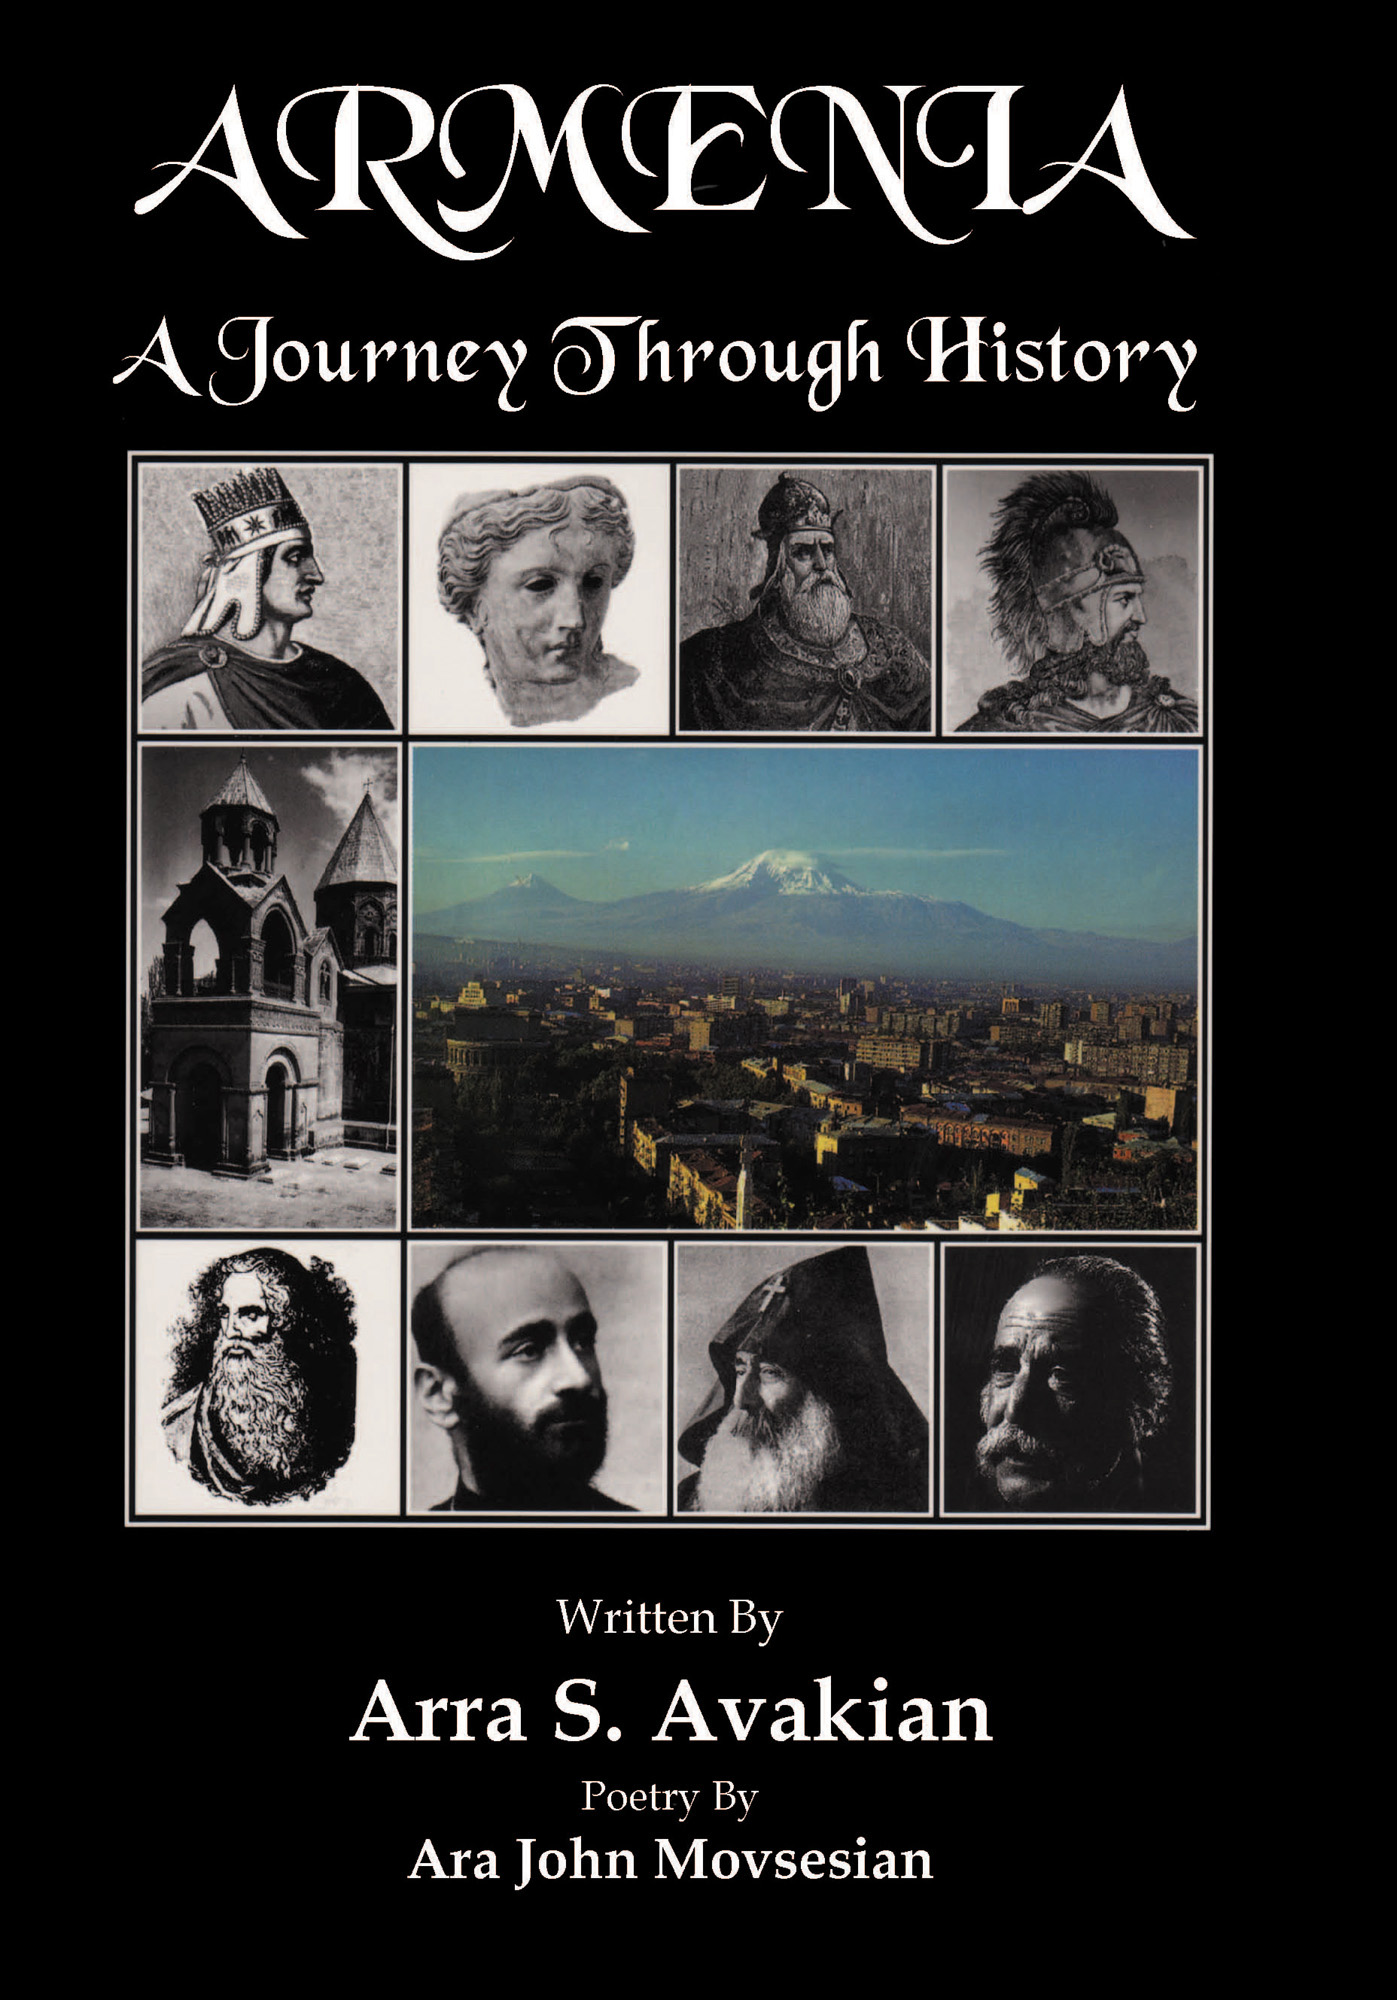 ARMENIA: A Journey Through History